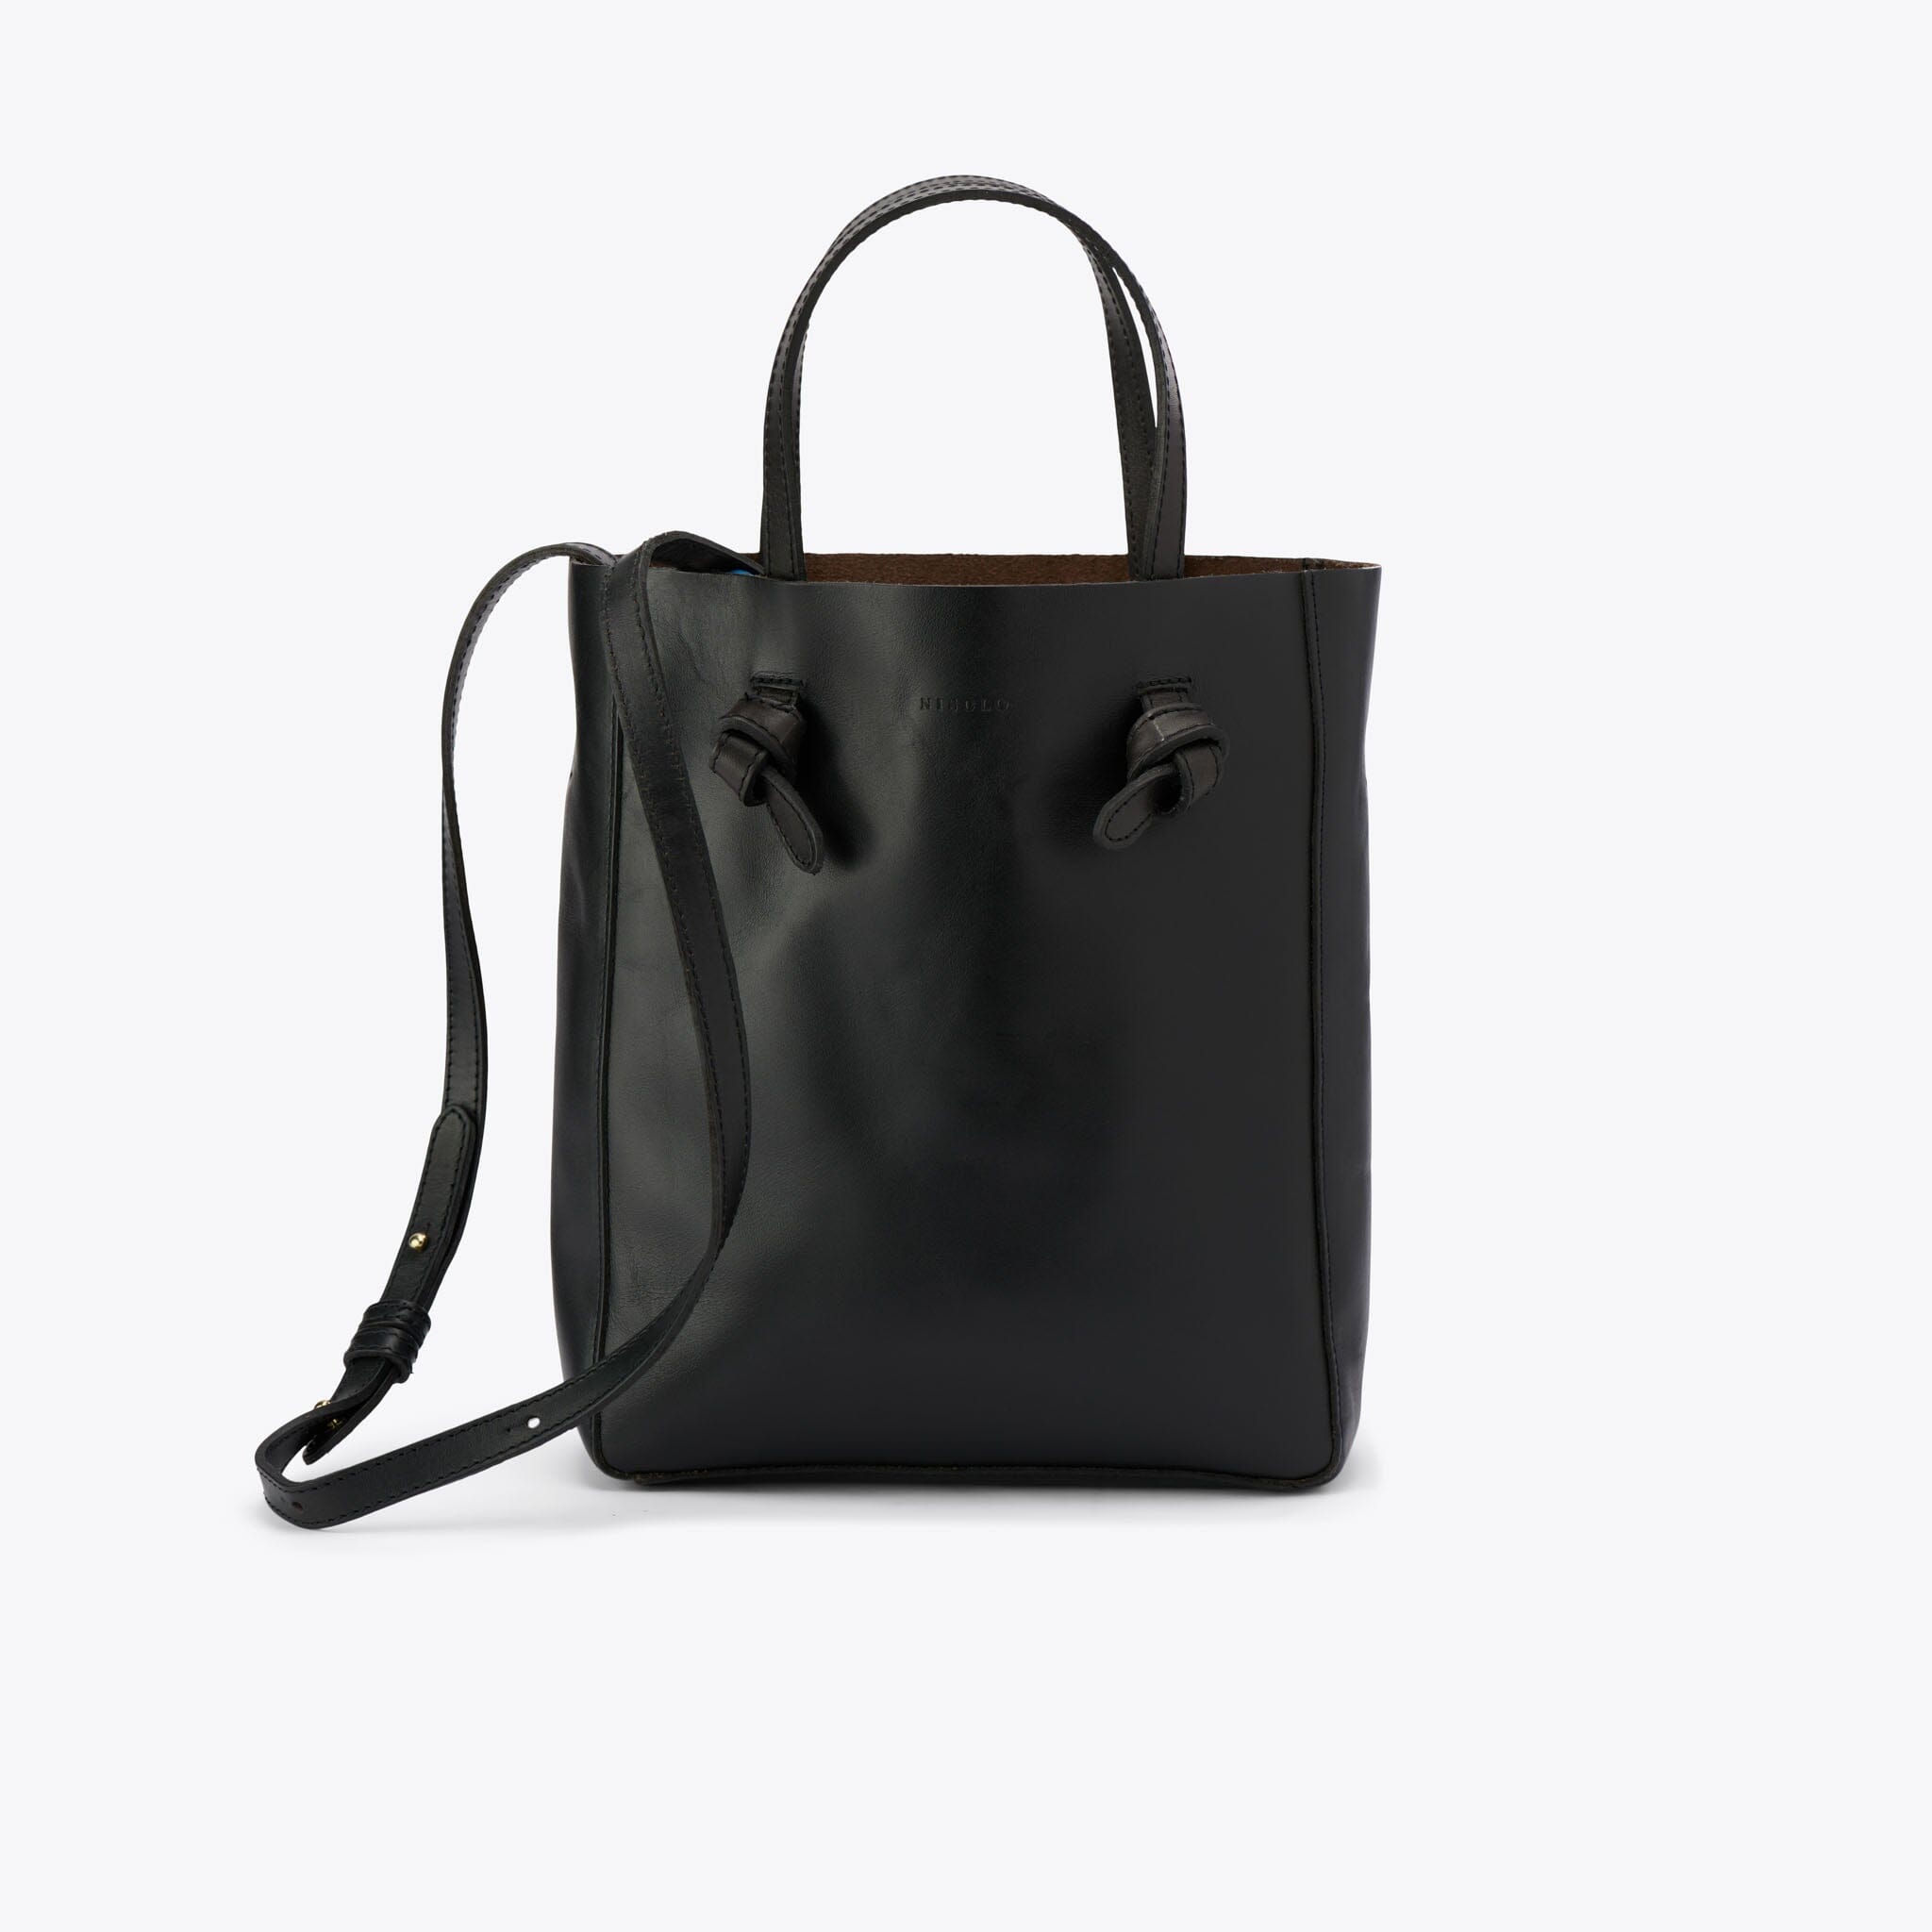 Simone Convertible Shopper Black Leather Handbag - unlined Nisolo 